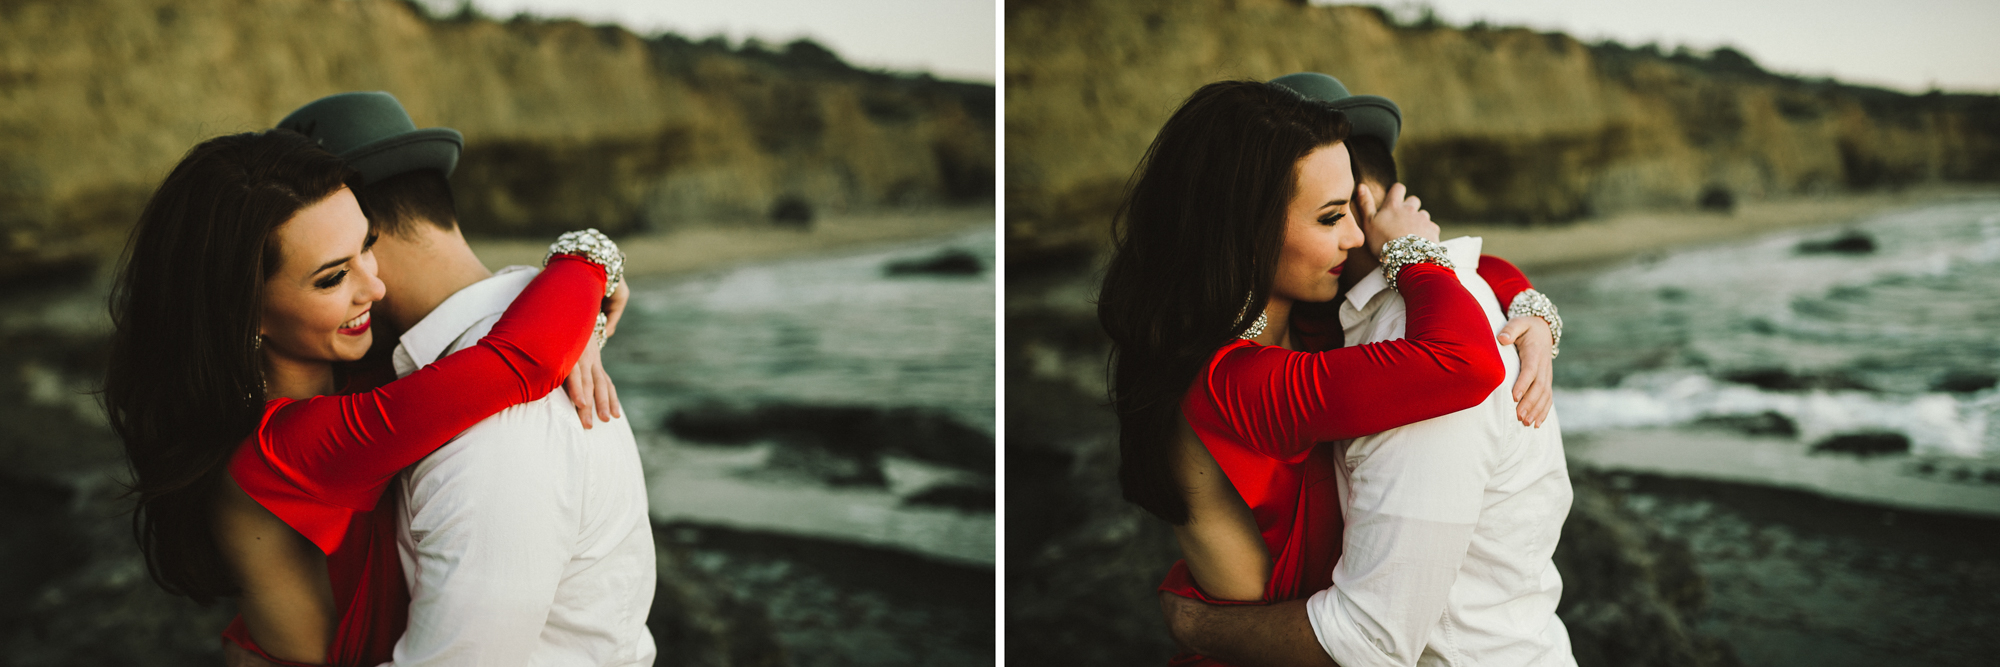 Isaiah & Taylor Photography - Los Angeles - Destination Wedding Photographers - San Diego Sunset Cliffs Beach Adventure Engagement-35.jpg